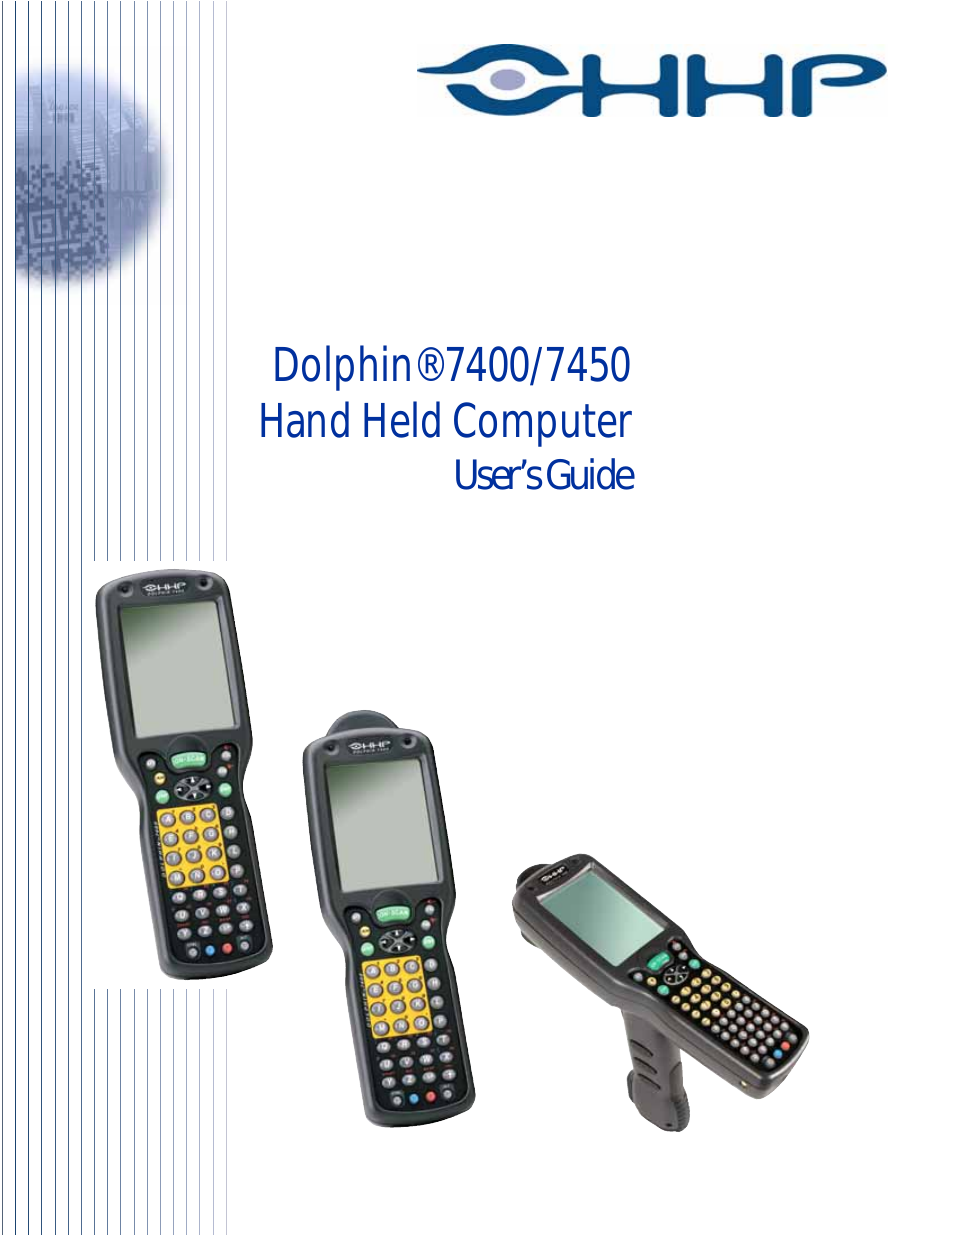 Hand Held Computer Dolphin 7450